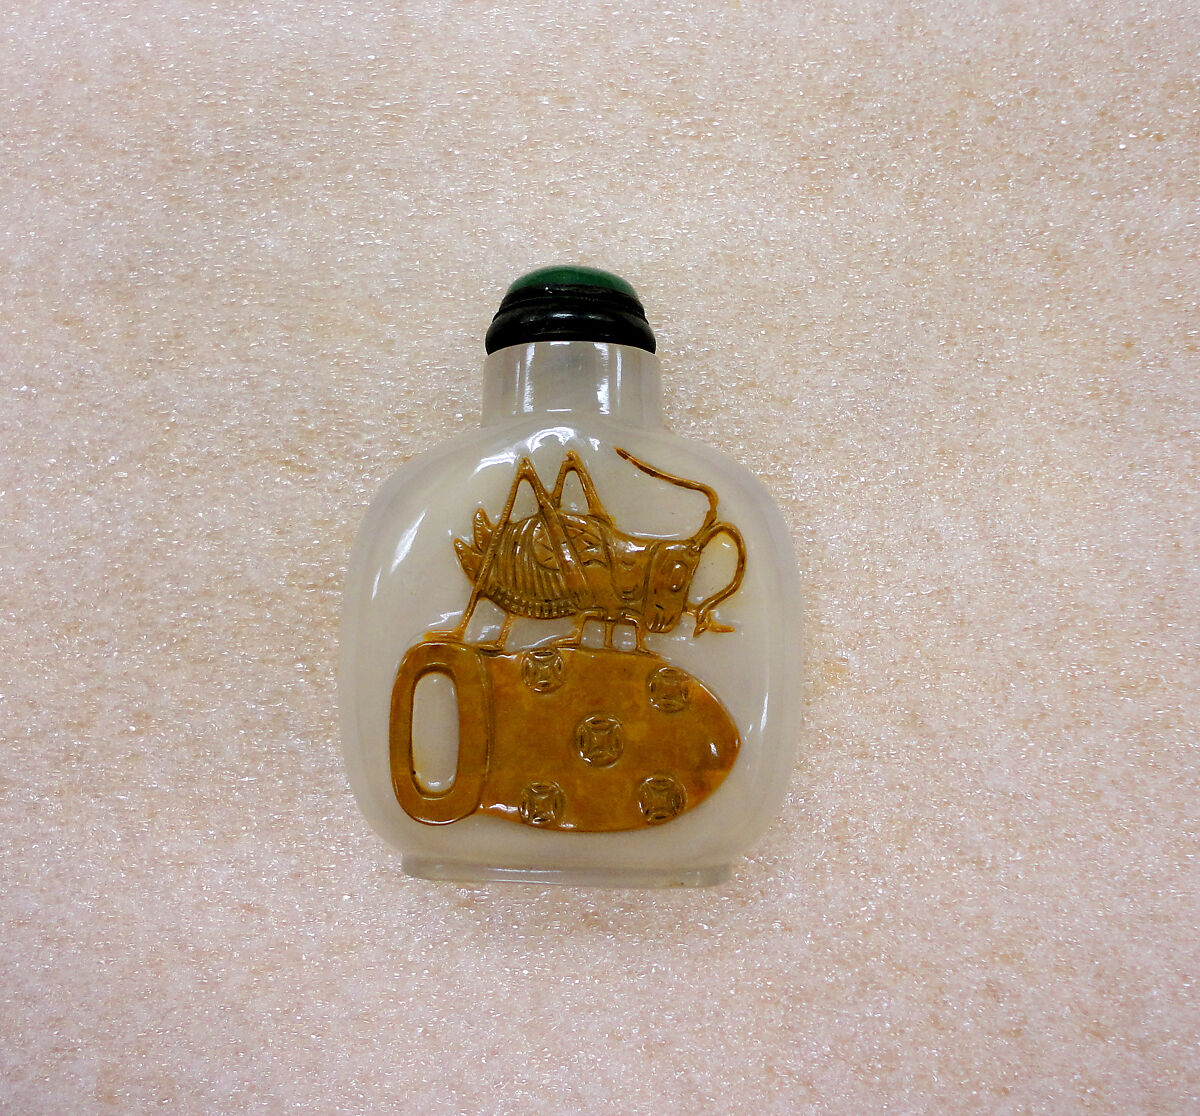 Snuff bottle, Onyx with jasper grasshopper, glass stopper, China 